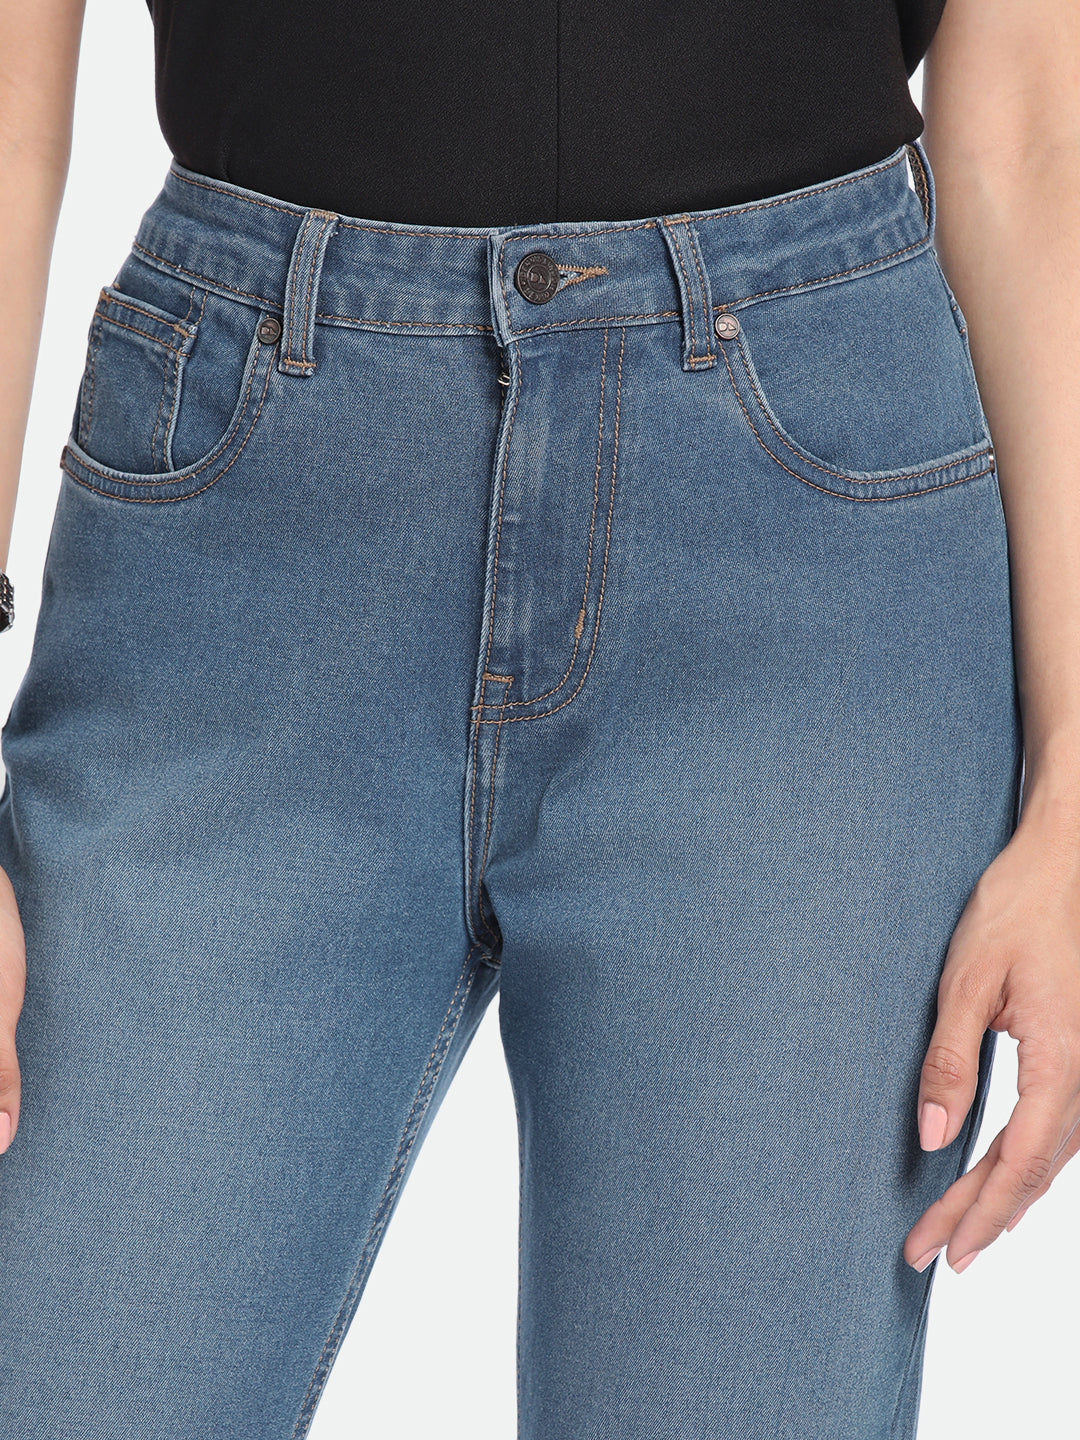 DL Woman Indigo Blue Slim Fit High Rise Jeans